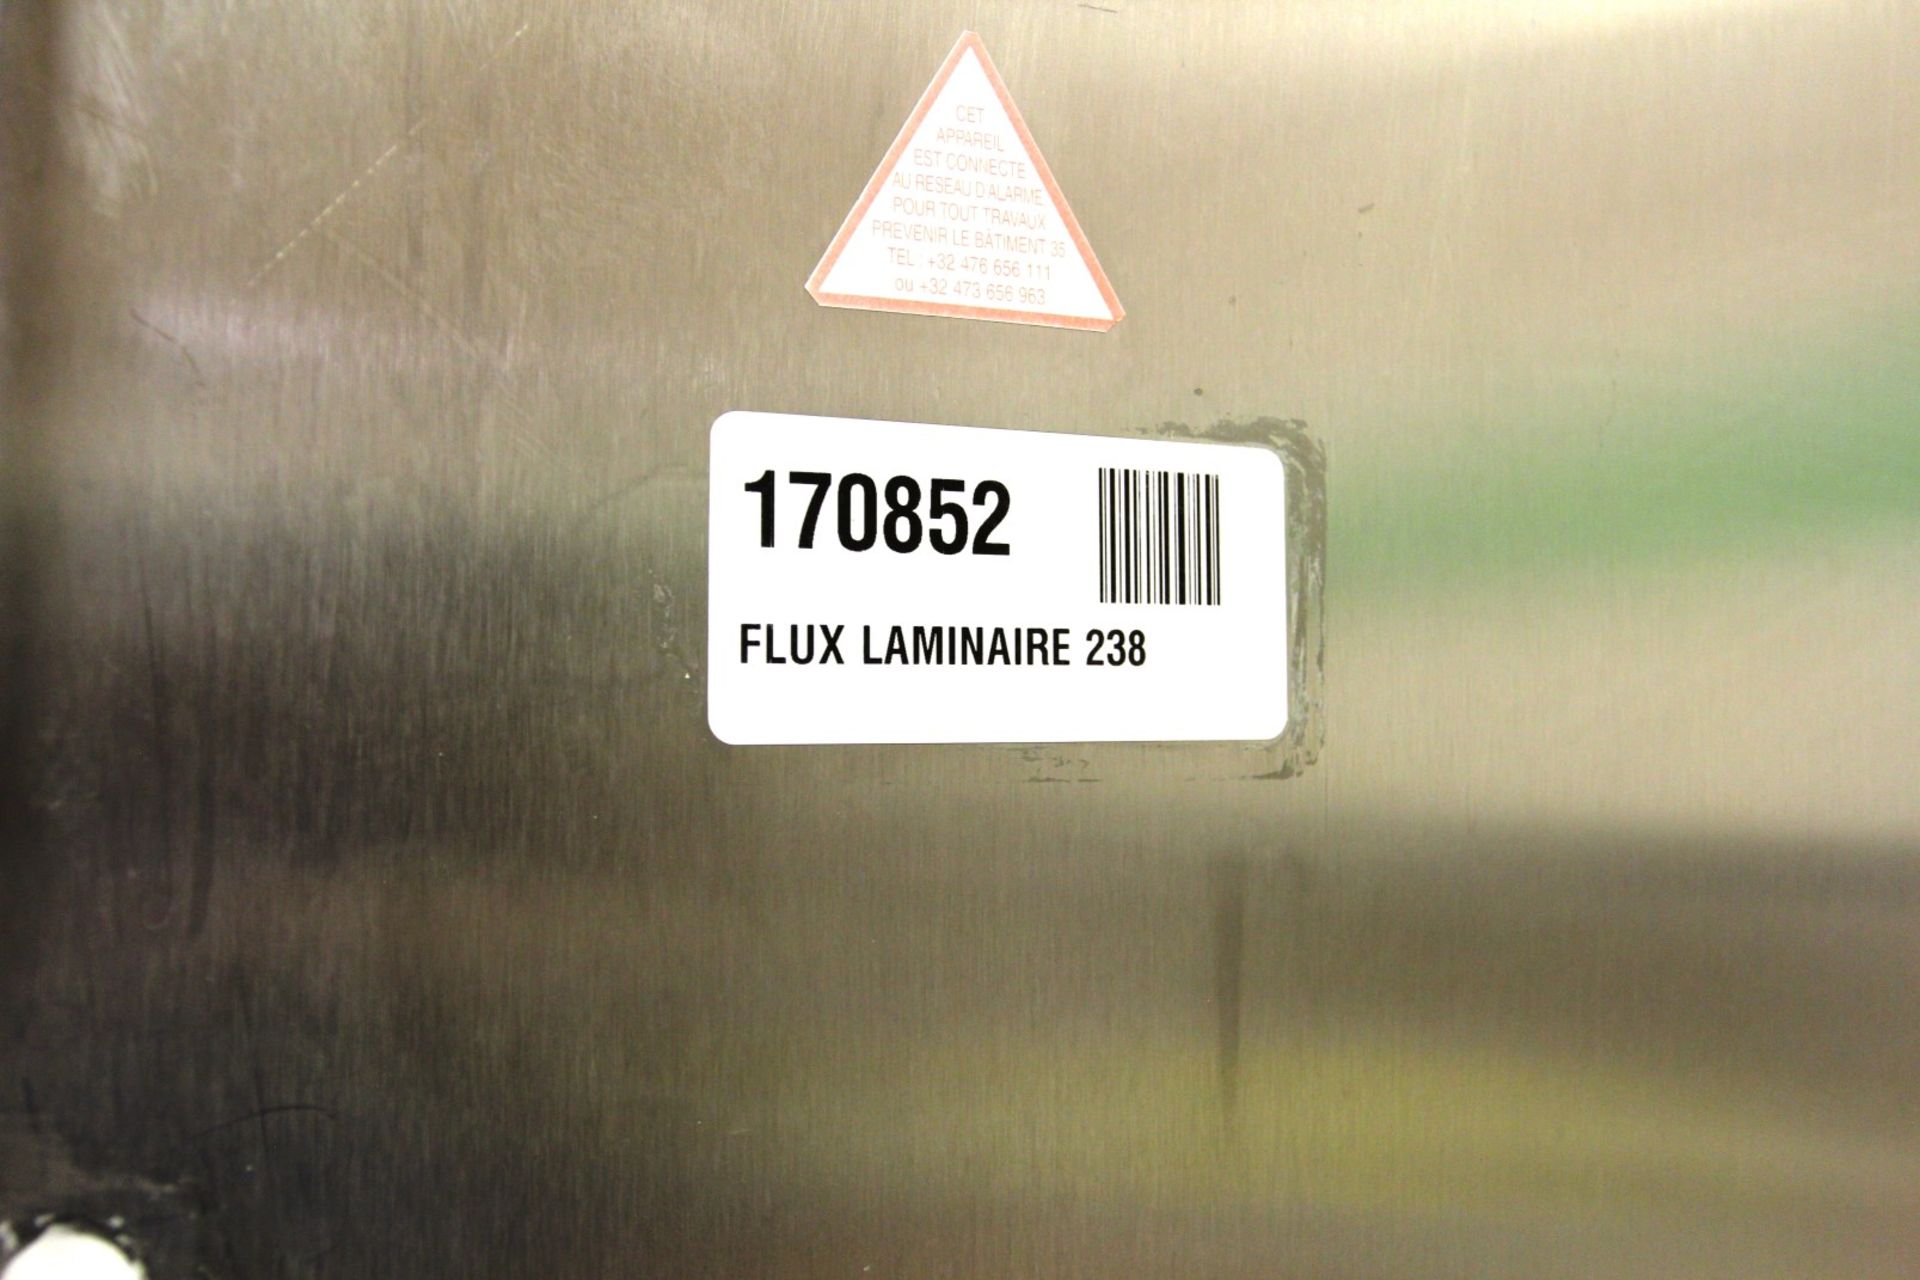 Monair Flux Laminaire Ventilated Fume Hood - Image 5 of 5